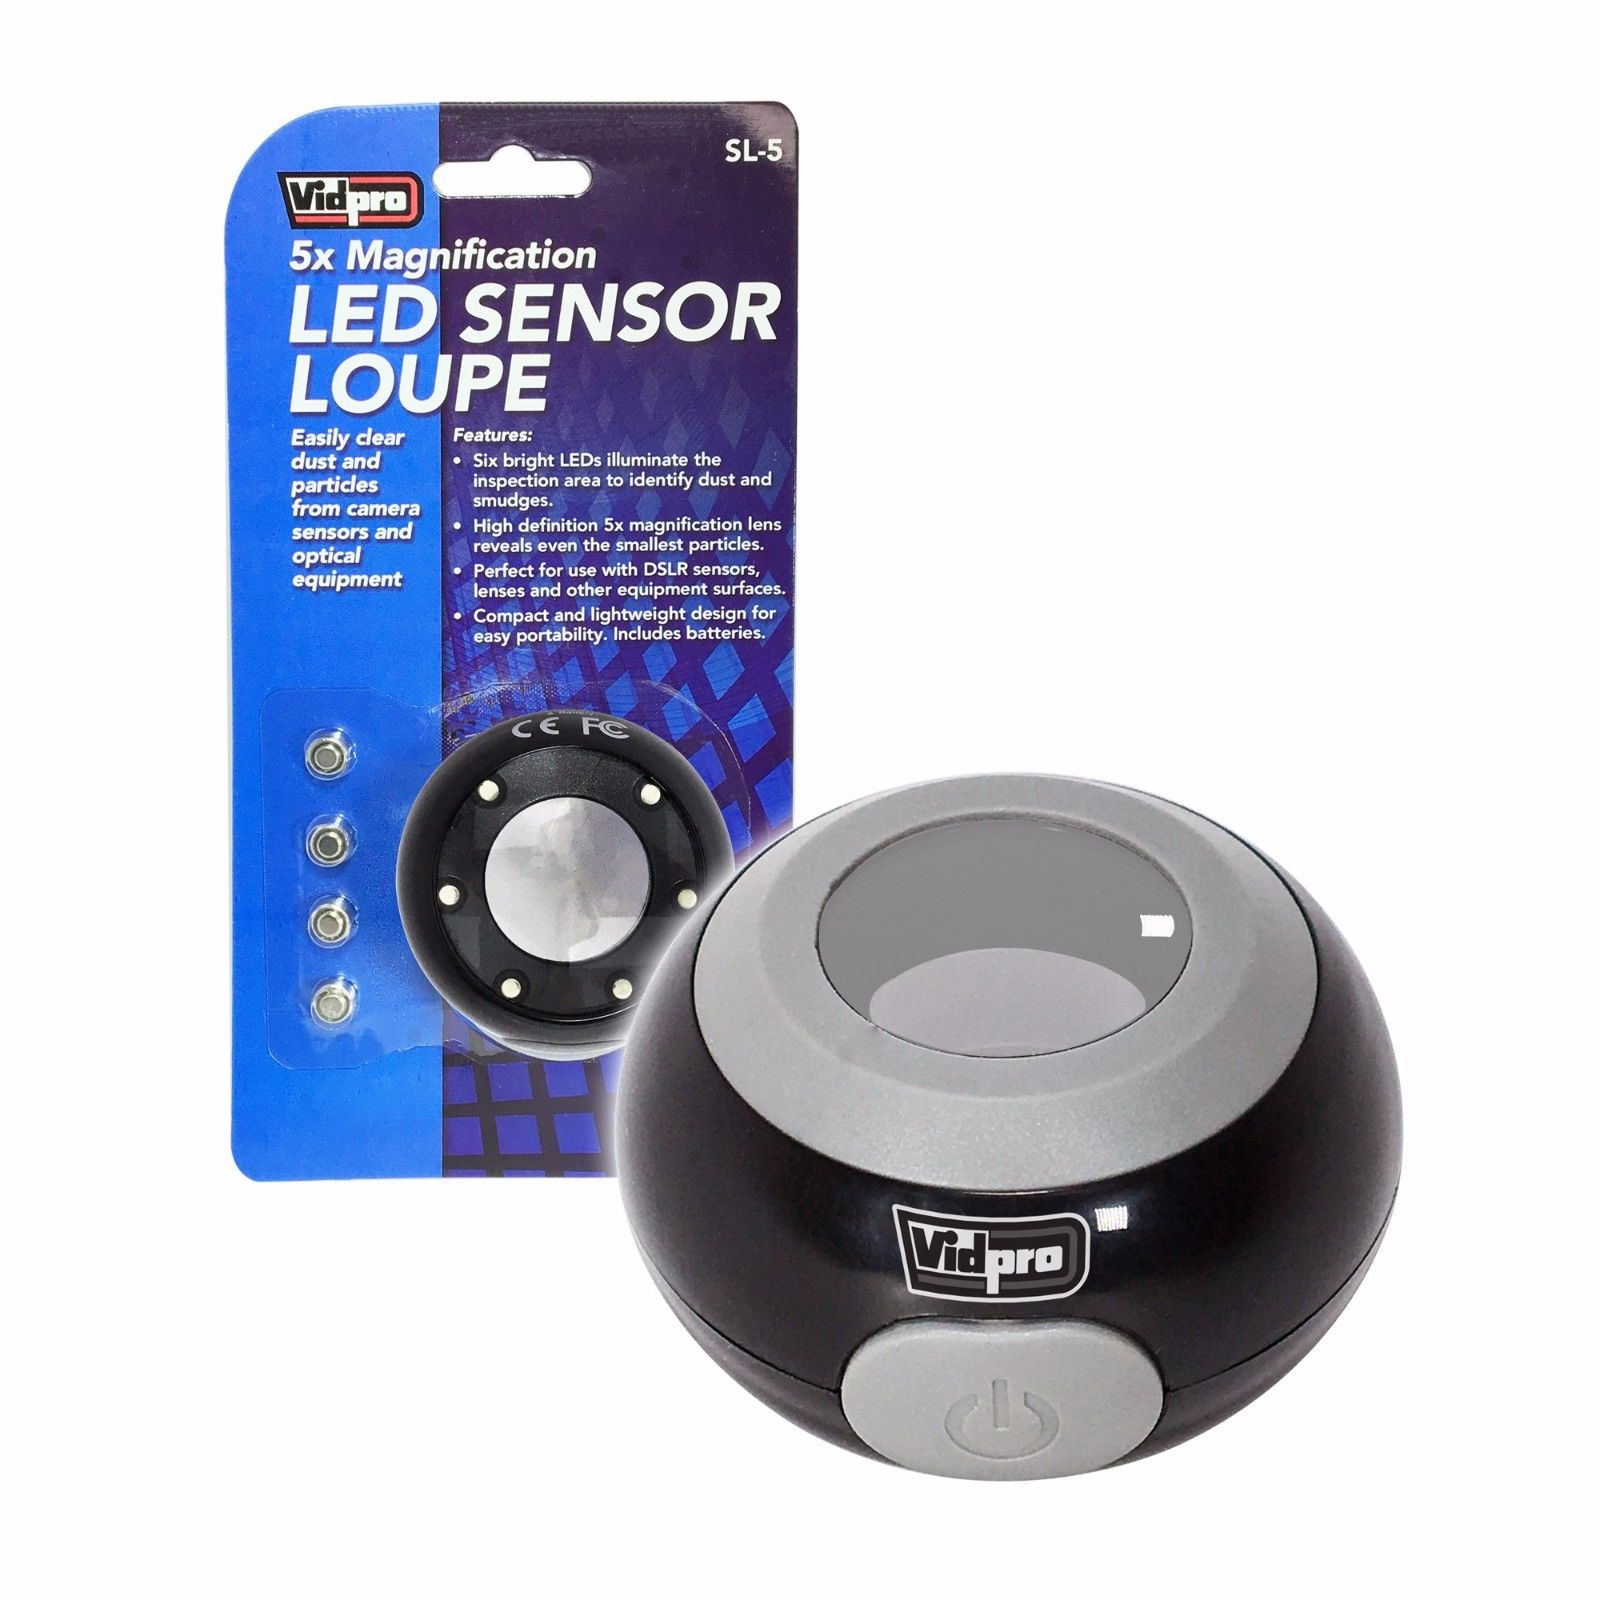 Vidpro SL-5 LED Sensor Loupe with 5x Magnification